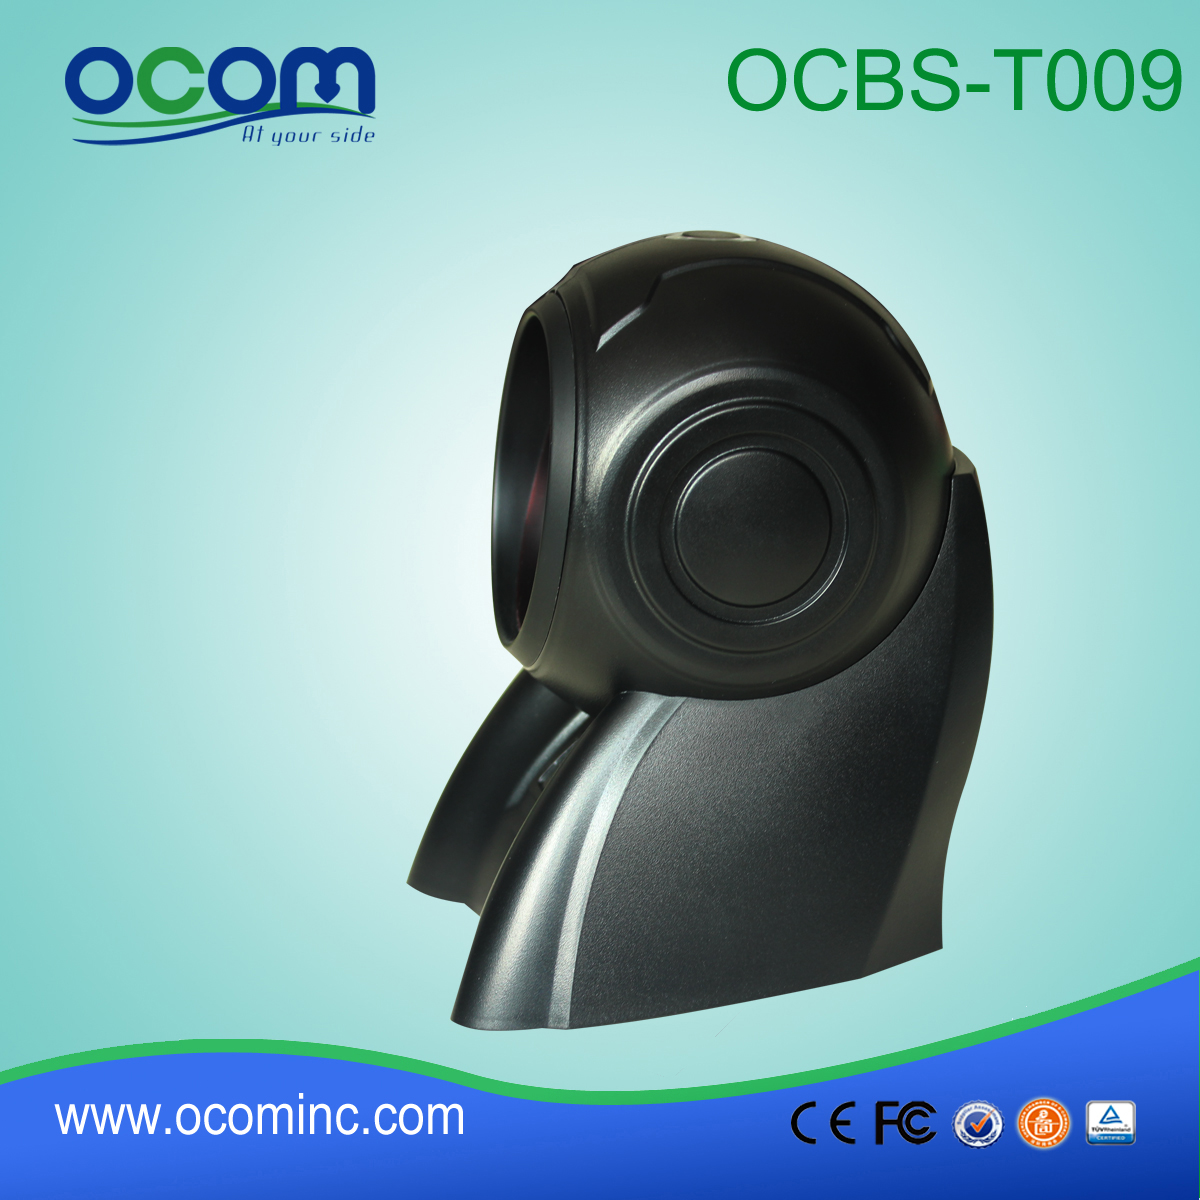 OCBs-T009: Máquina Barcode Scanner Supermercado Auto Sense USB